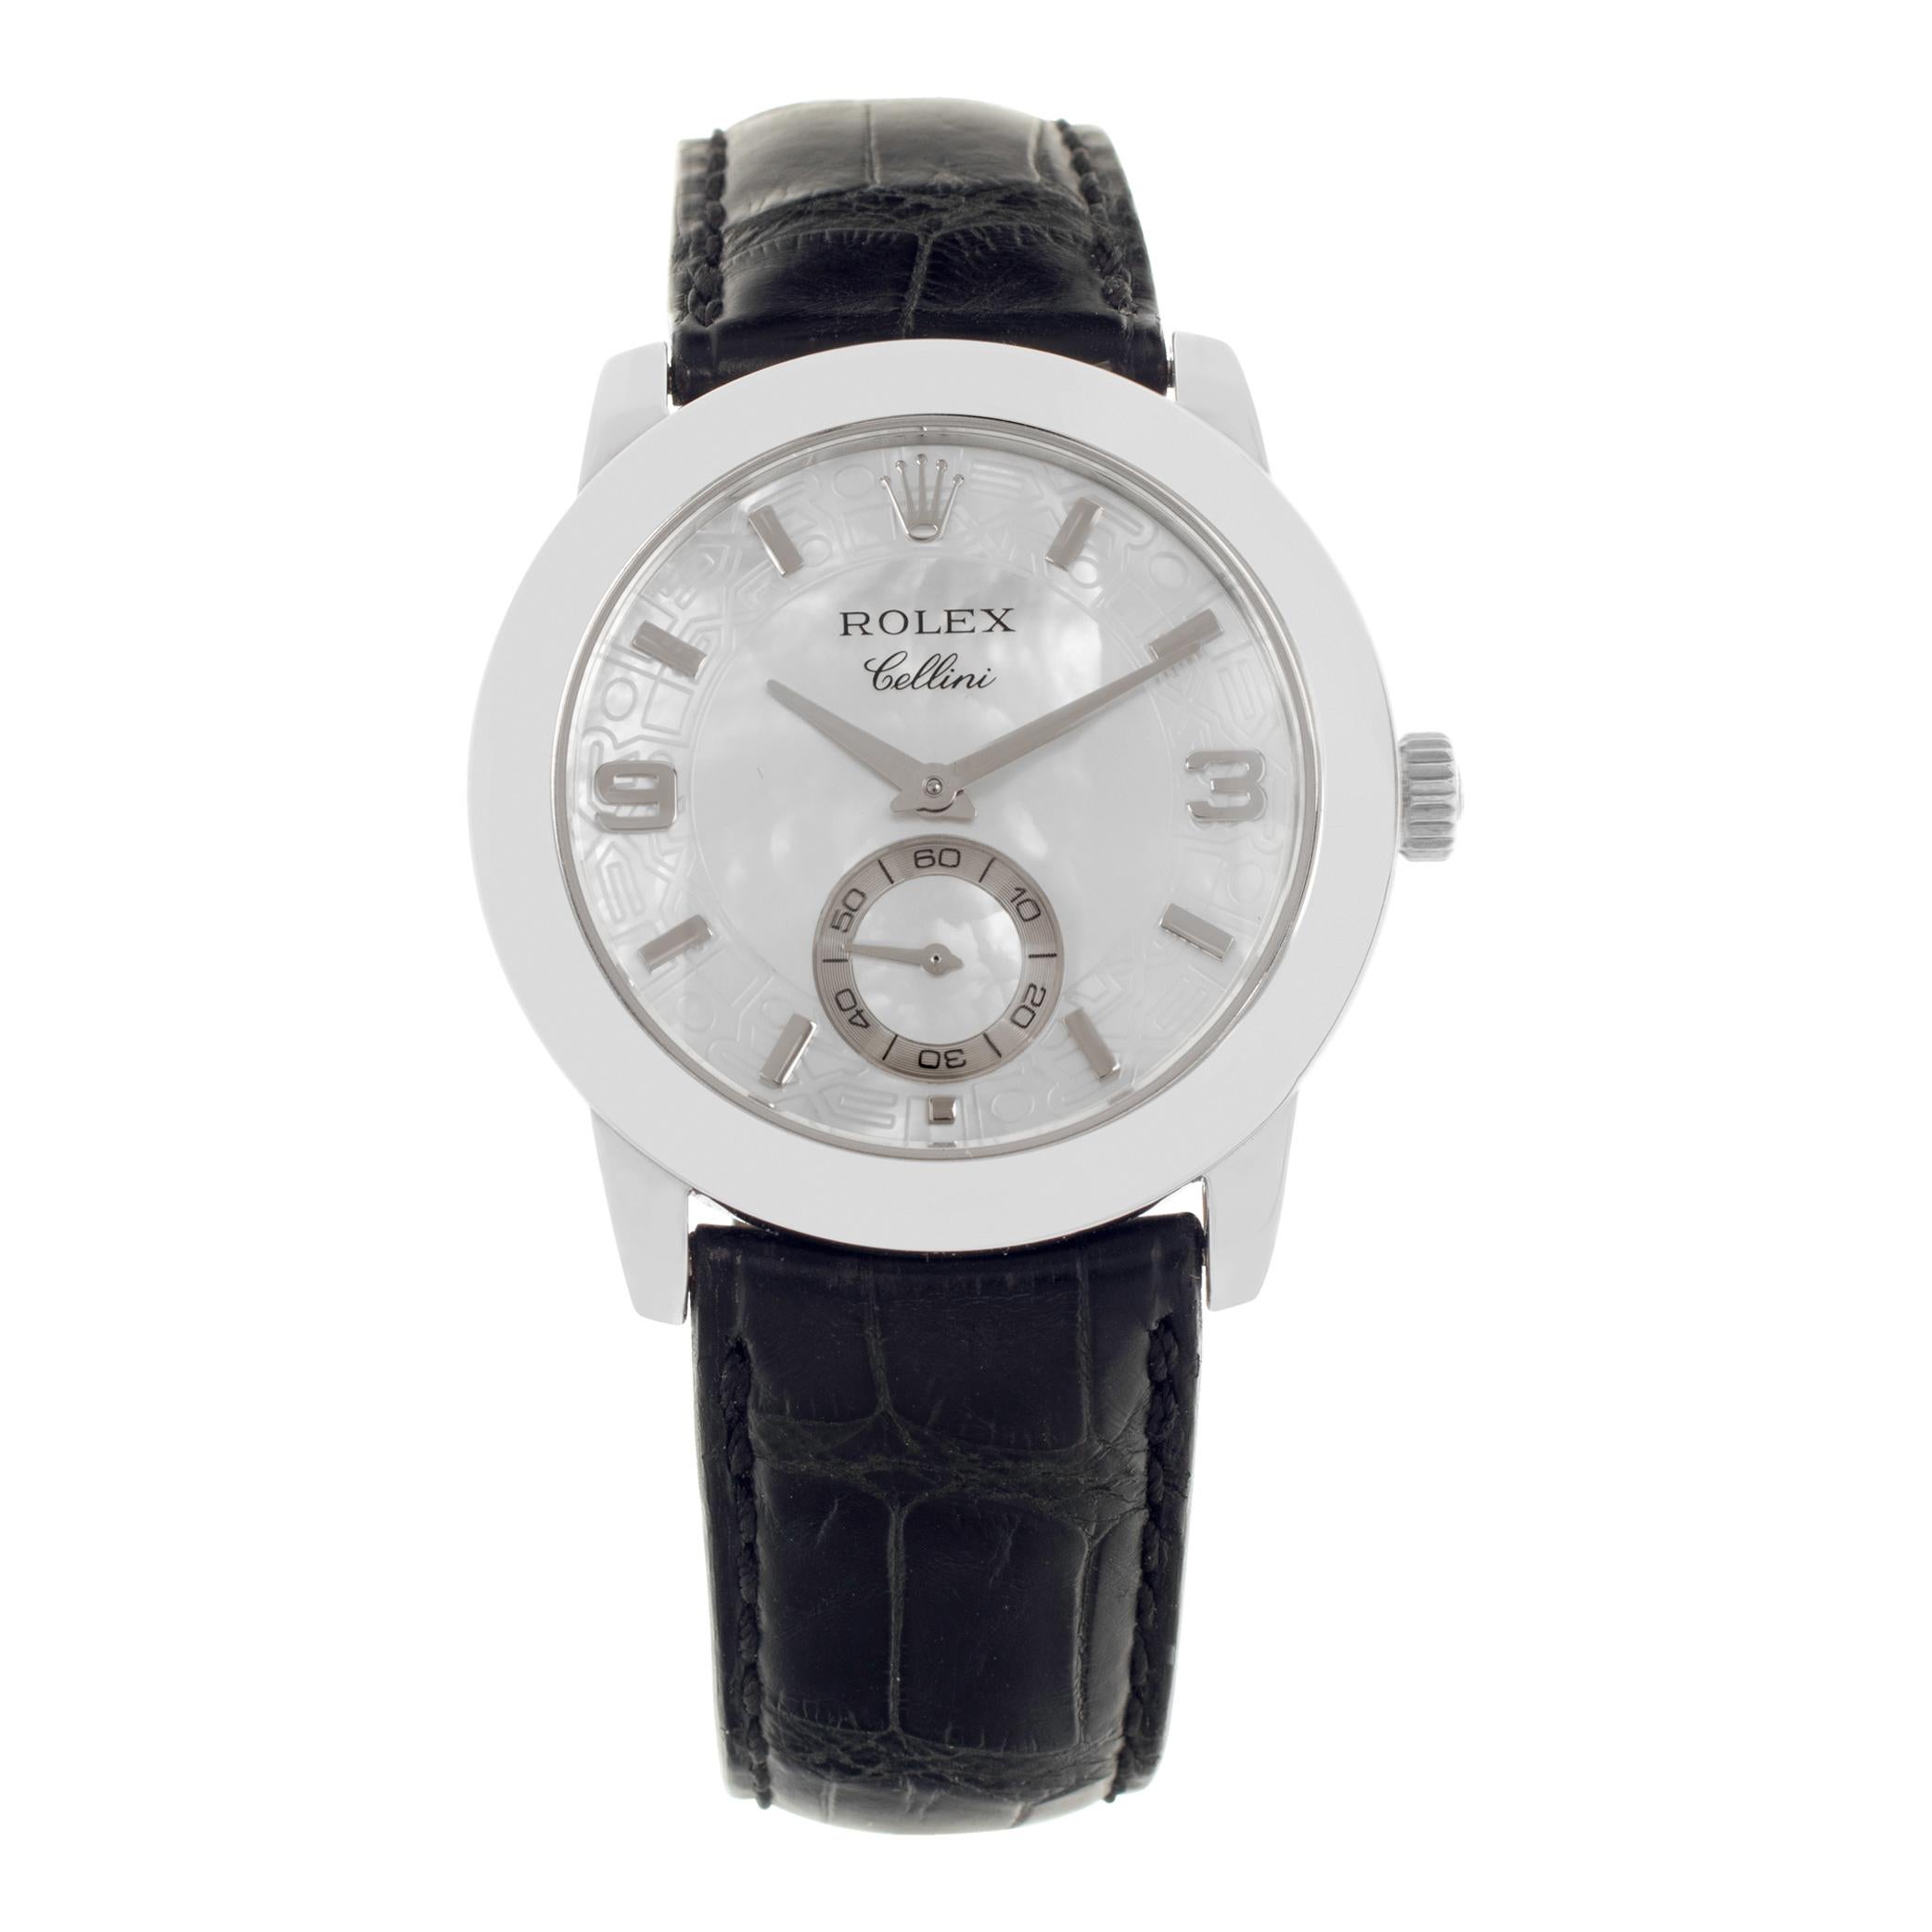 Rolex Cellini platinum Manual Wristwatch Ref 5240 For Sale